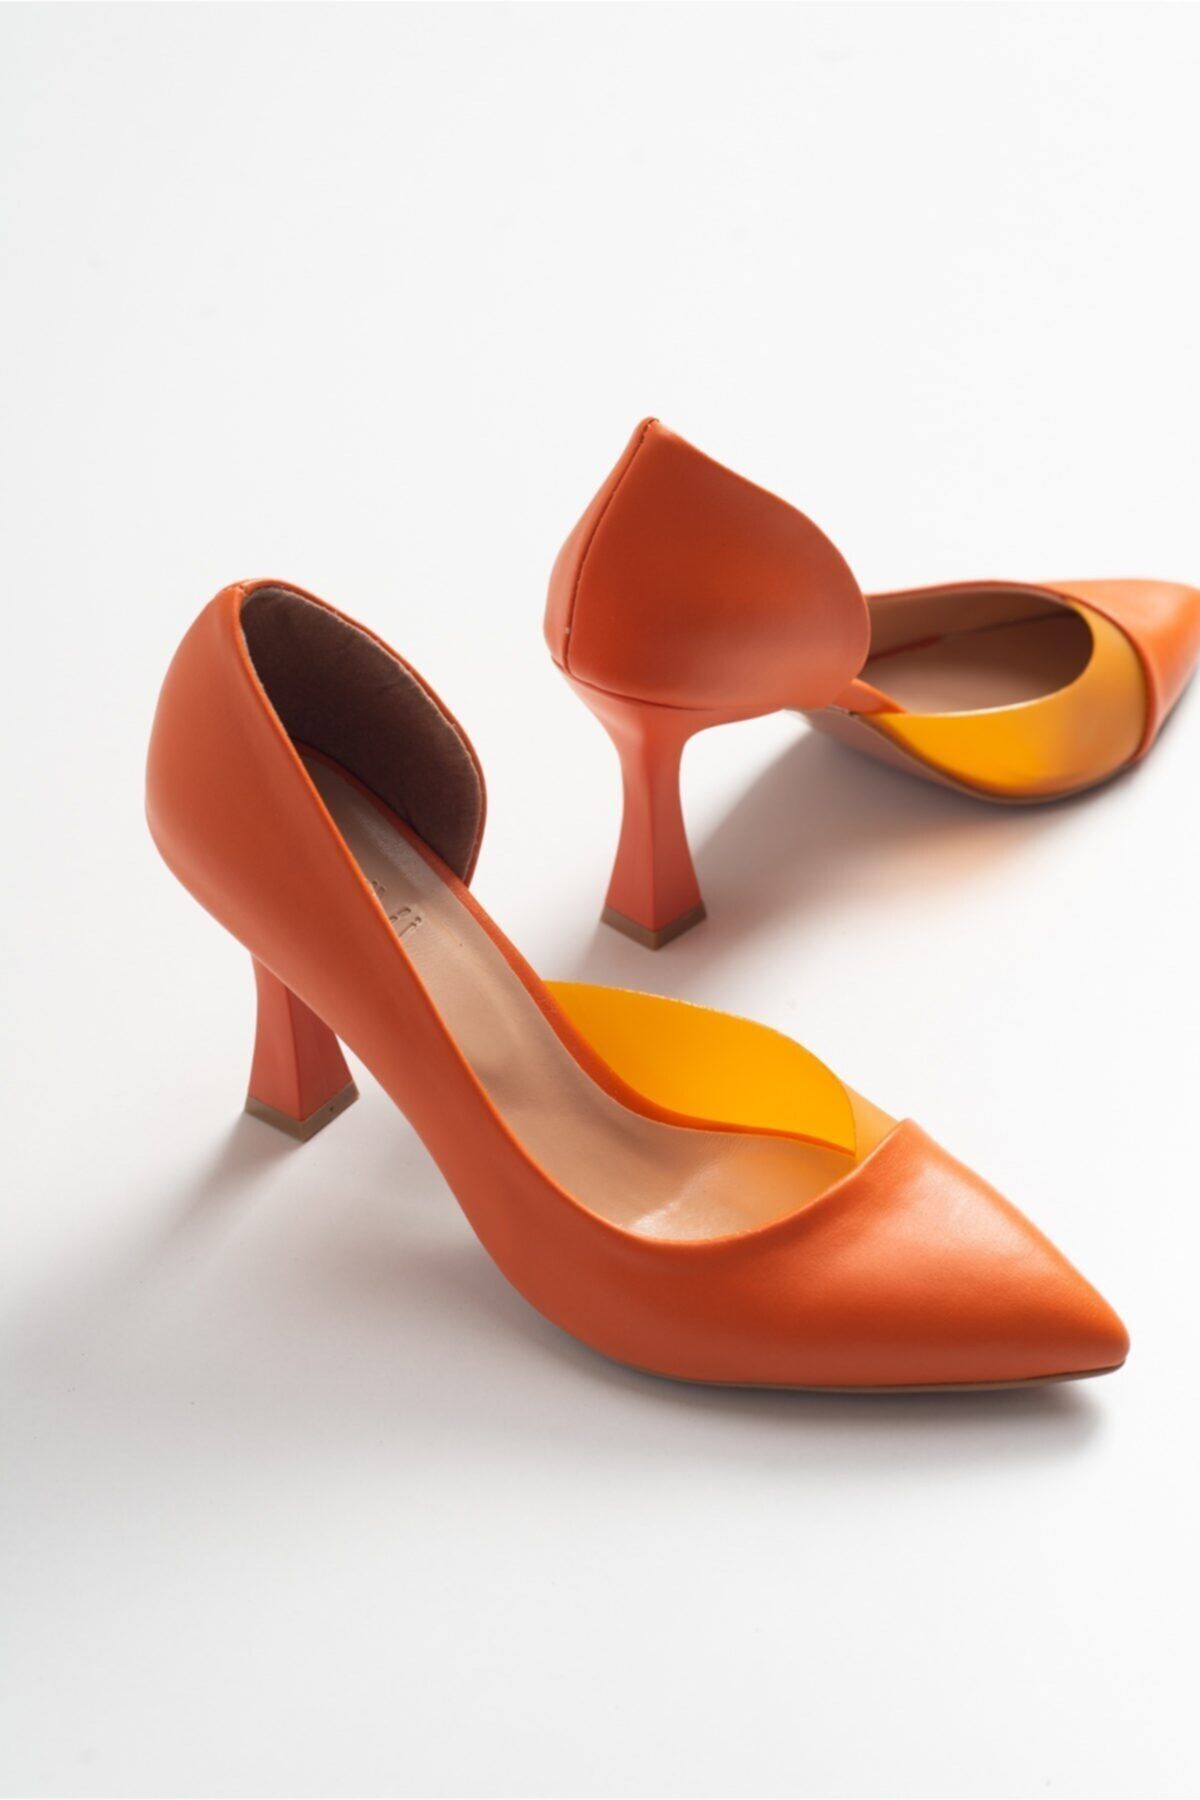 luvishoes 653 Turuncu Cilt Topuklu Kadın Ayakkabı